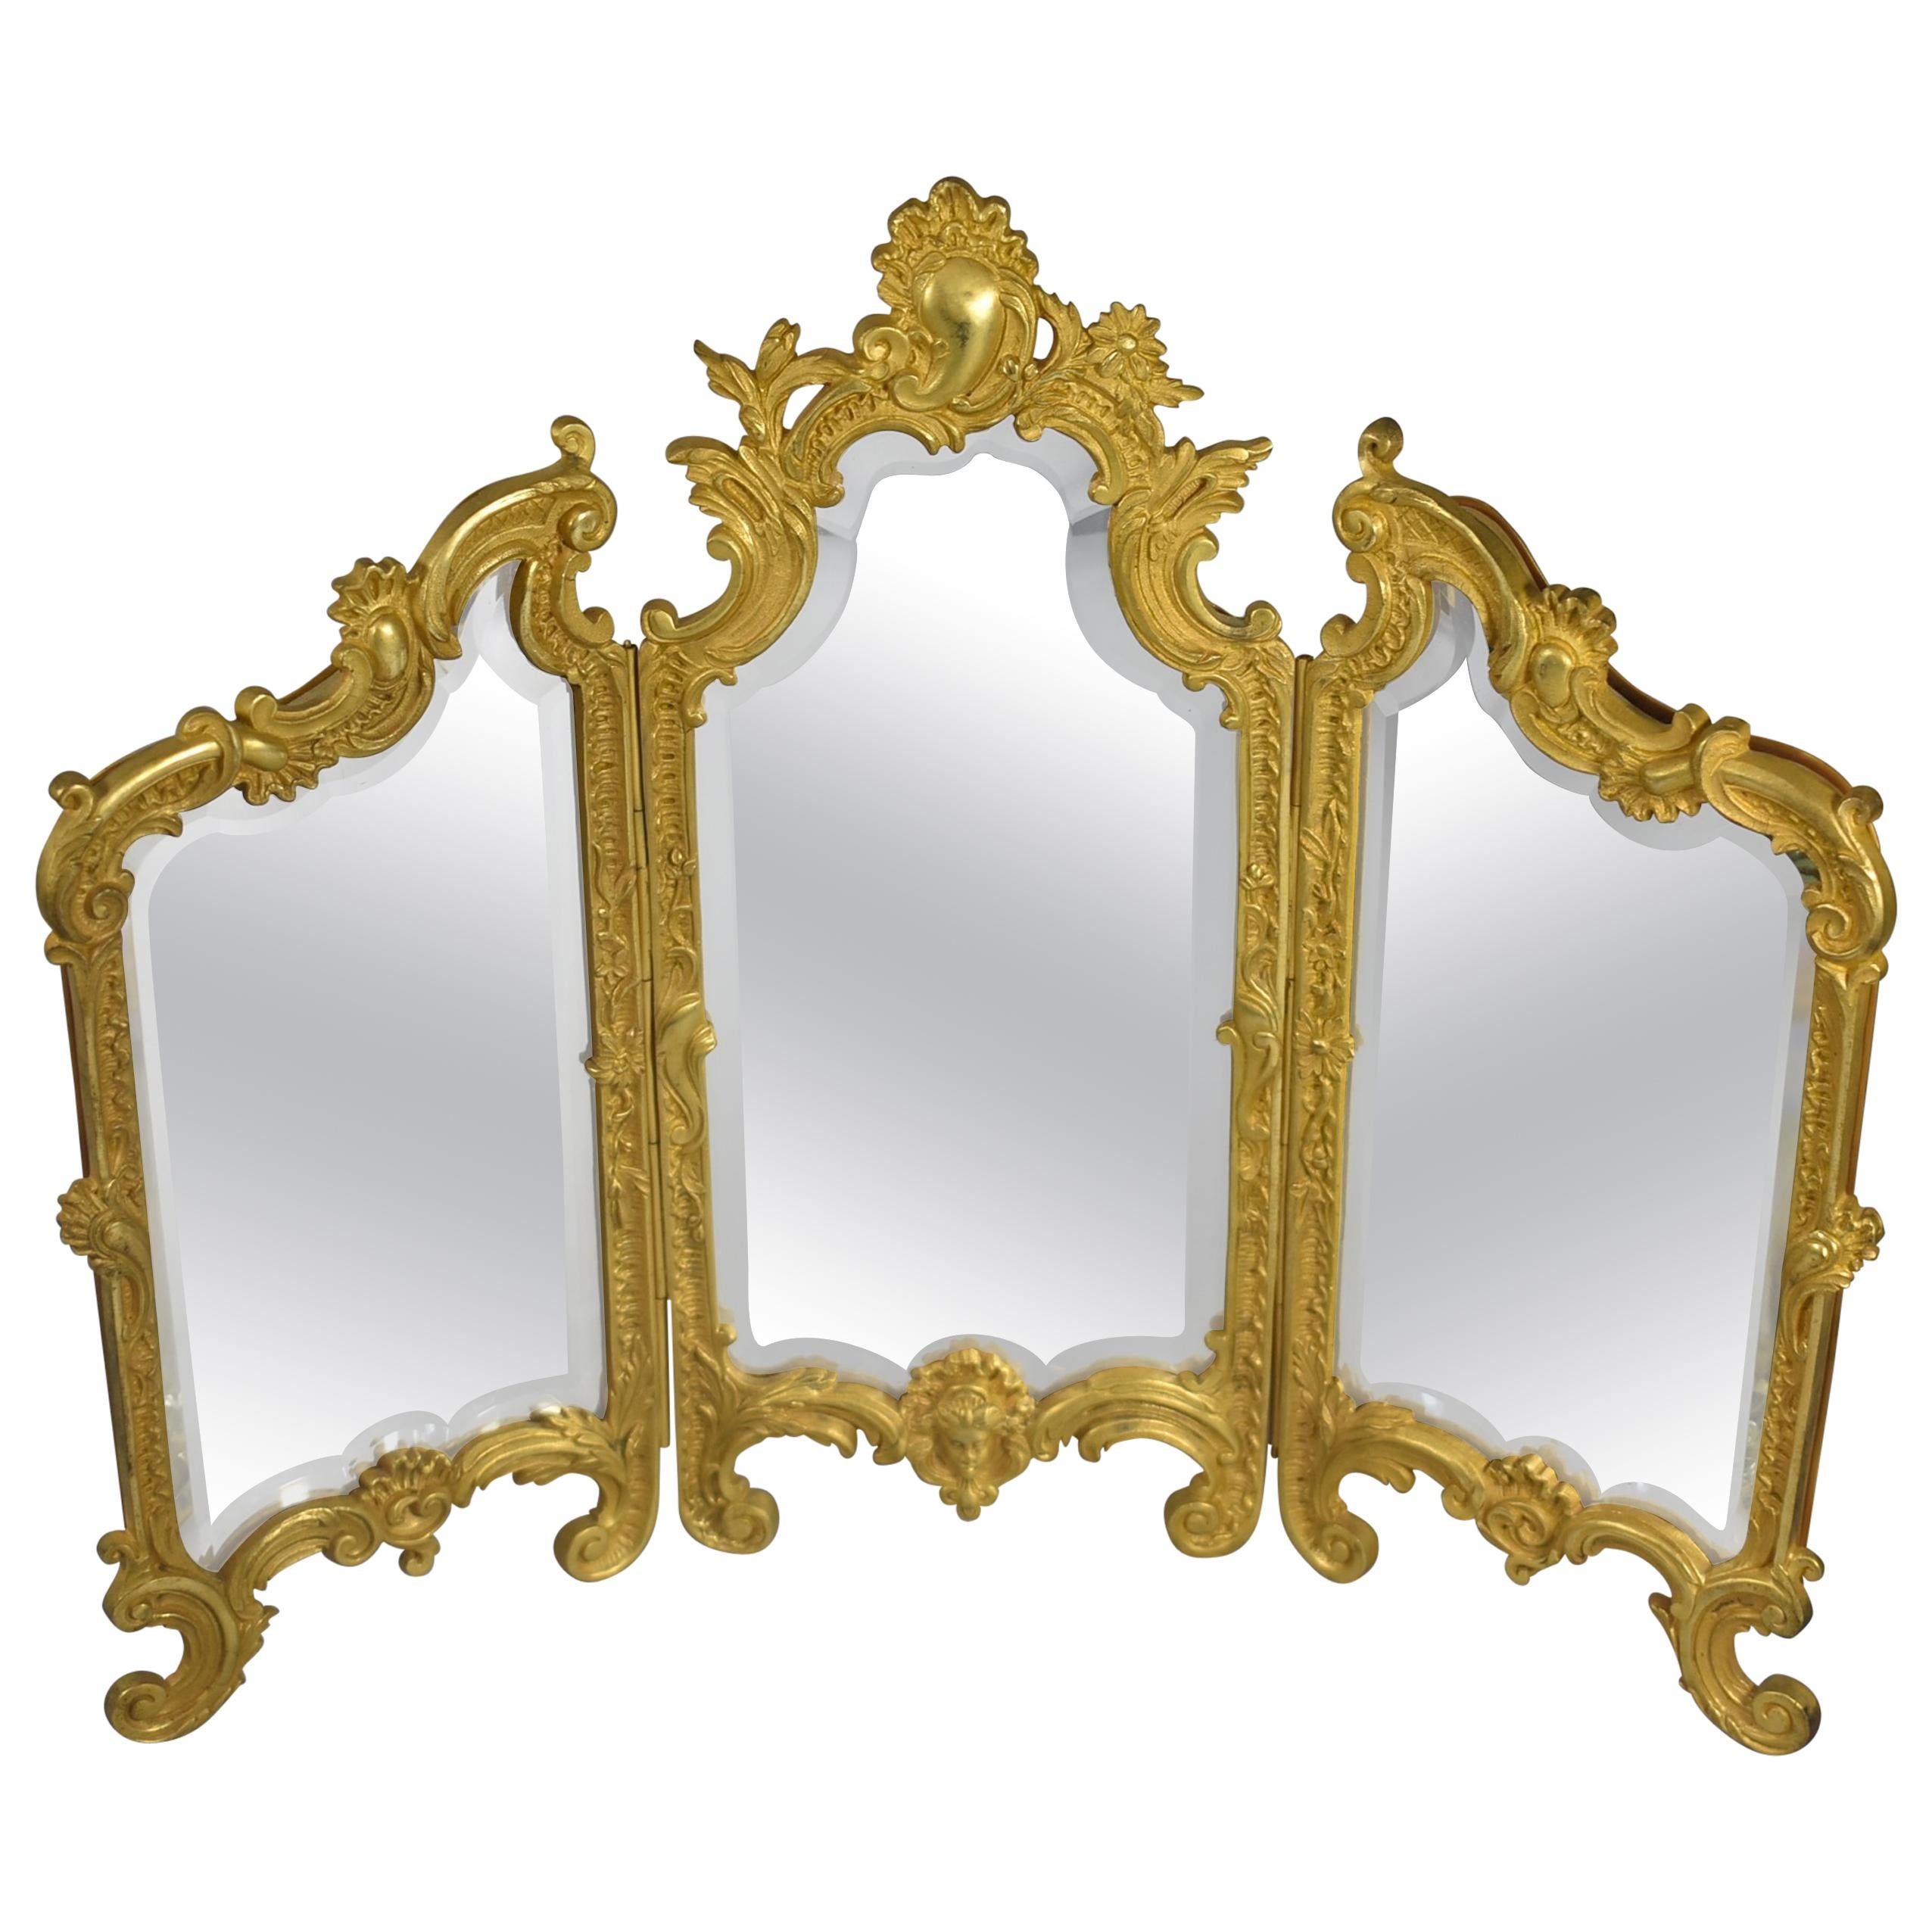 Miniature Triptych Gold Doré Dresser Top Beveled Mirror Female Figural Face